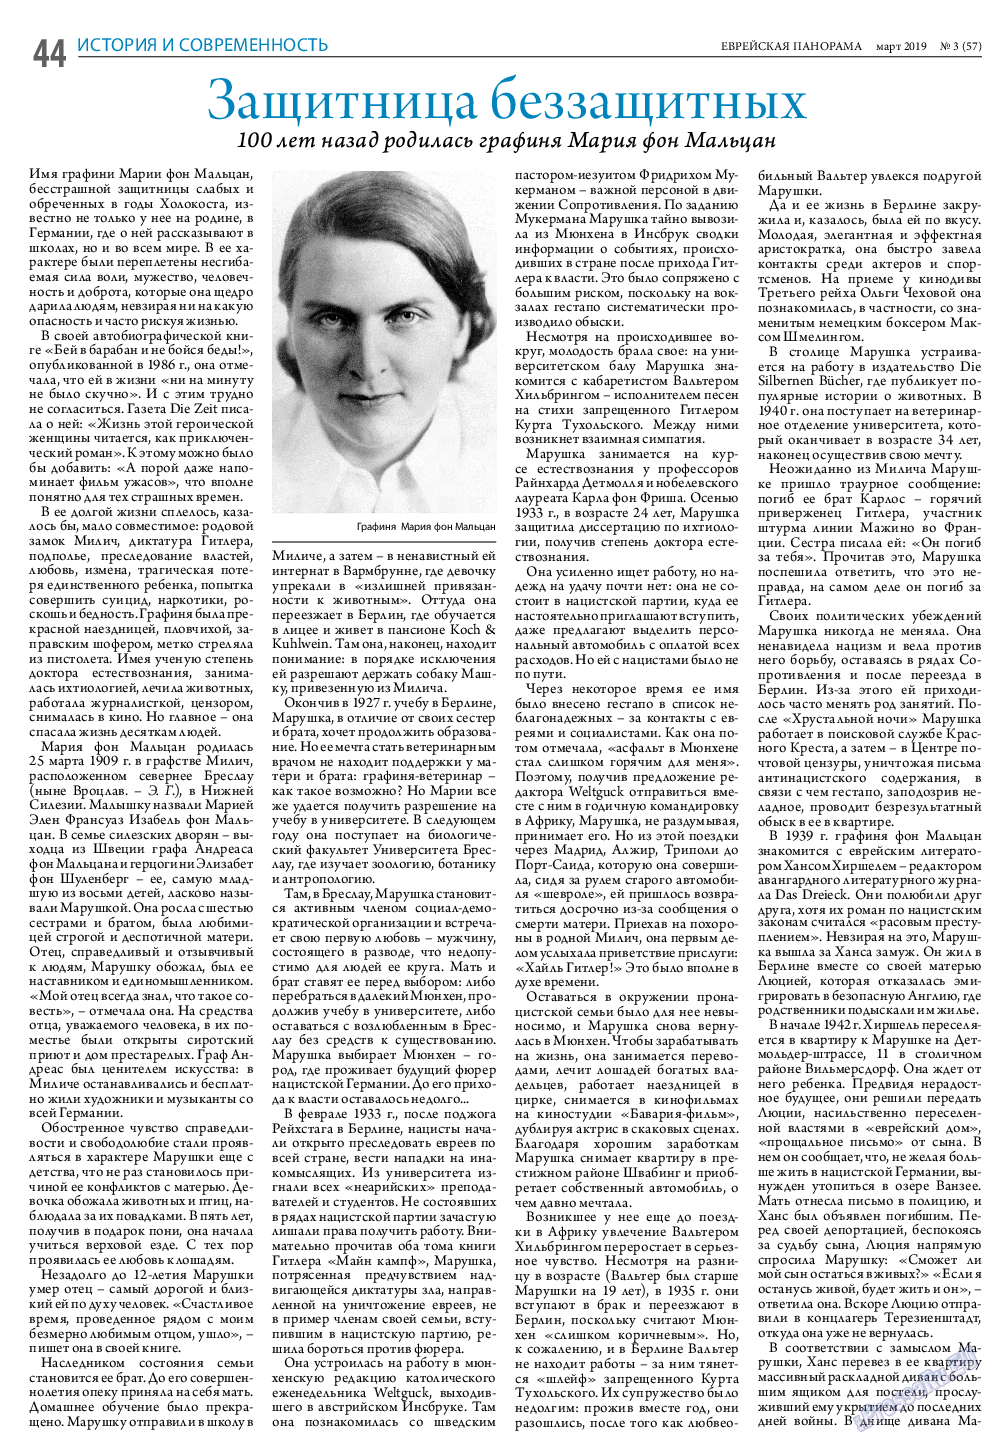 Еврейская панорама, газета. 2019 №3 стр.44